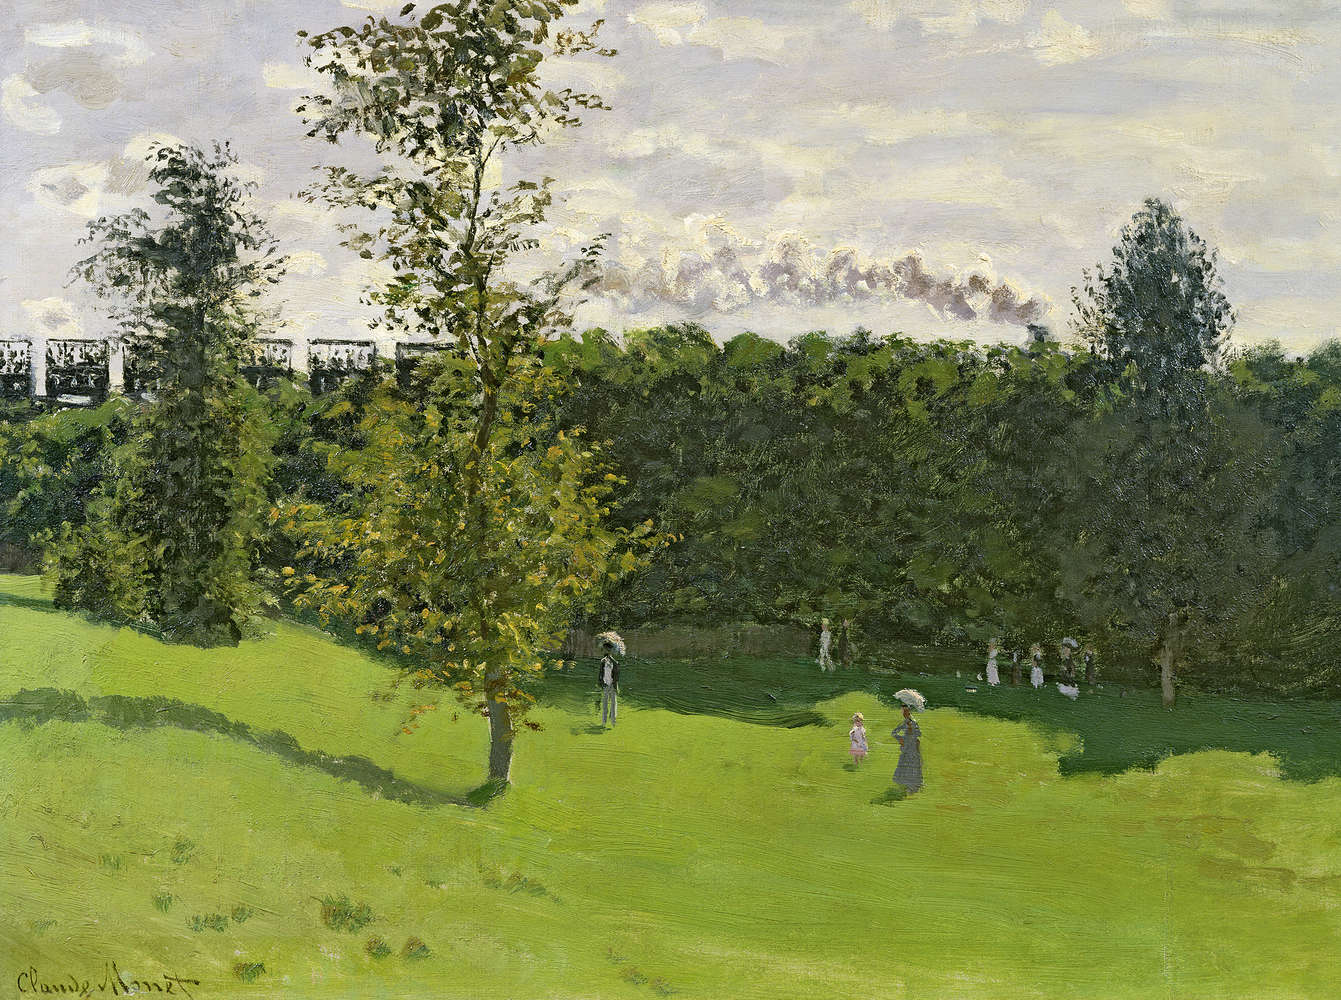             Mural "Tren en el campo" de Claude Monet
        